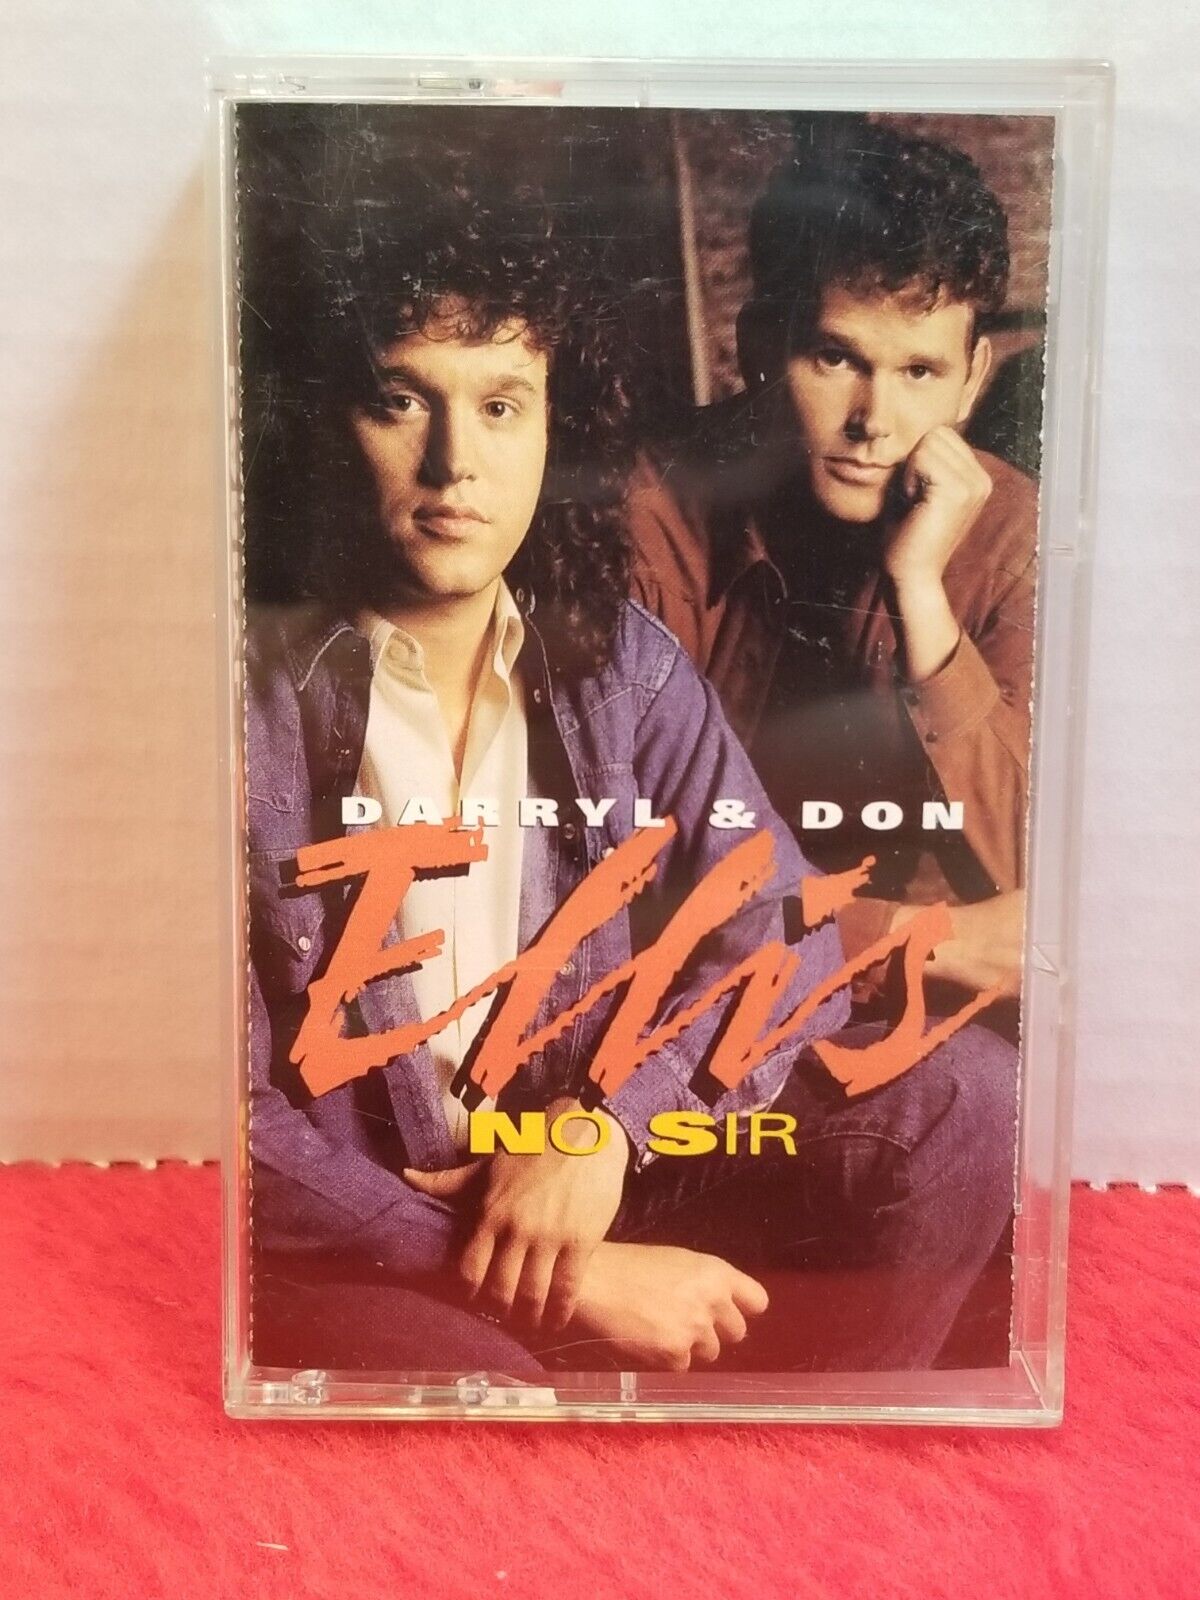 Darryl & Don Ellis No Sir  Cassette Tape 1992 Epic Records